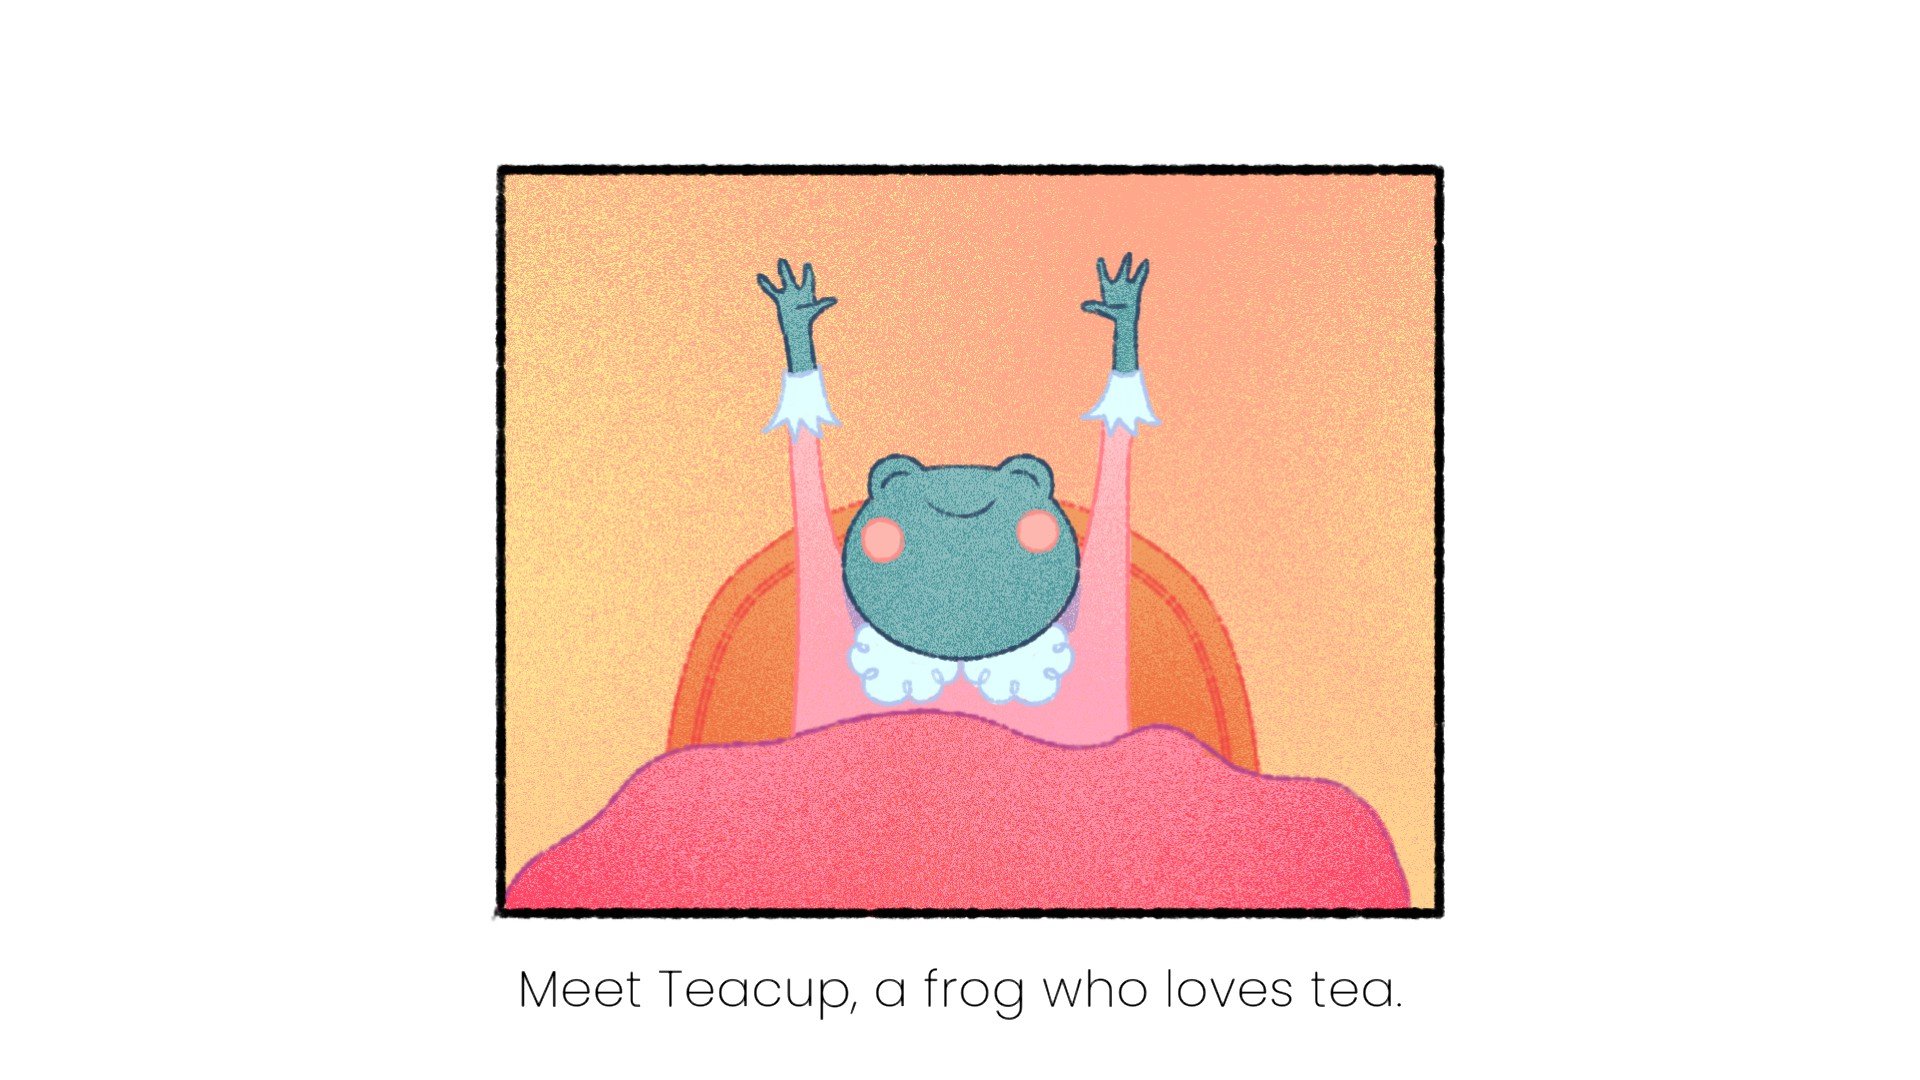 Teacup - Narrative